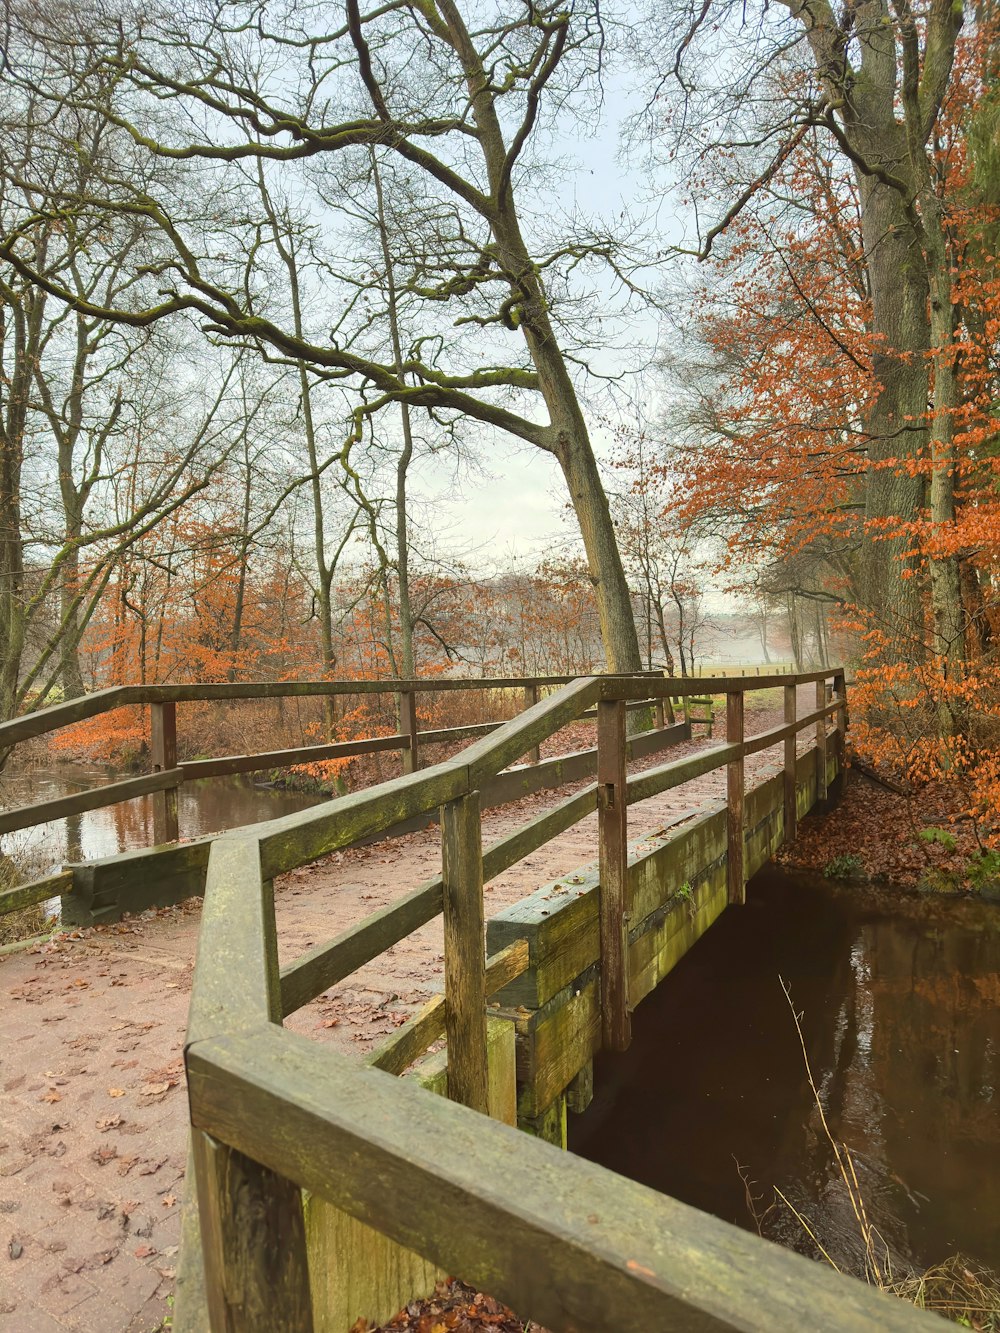 a wooden bridge over a small stream in a park